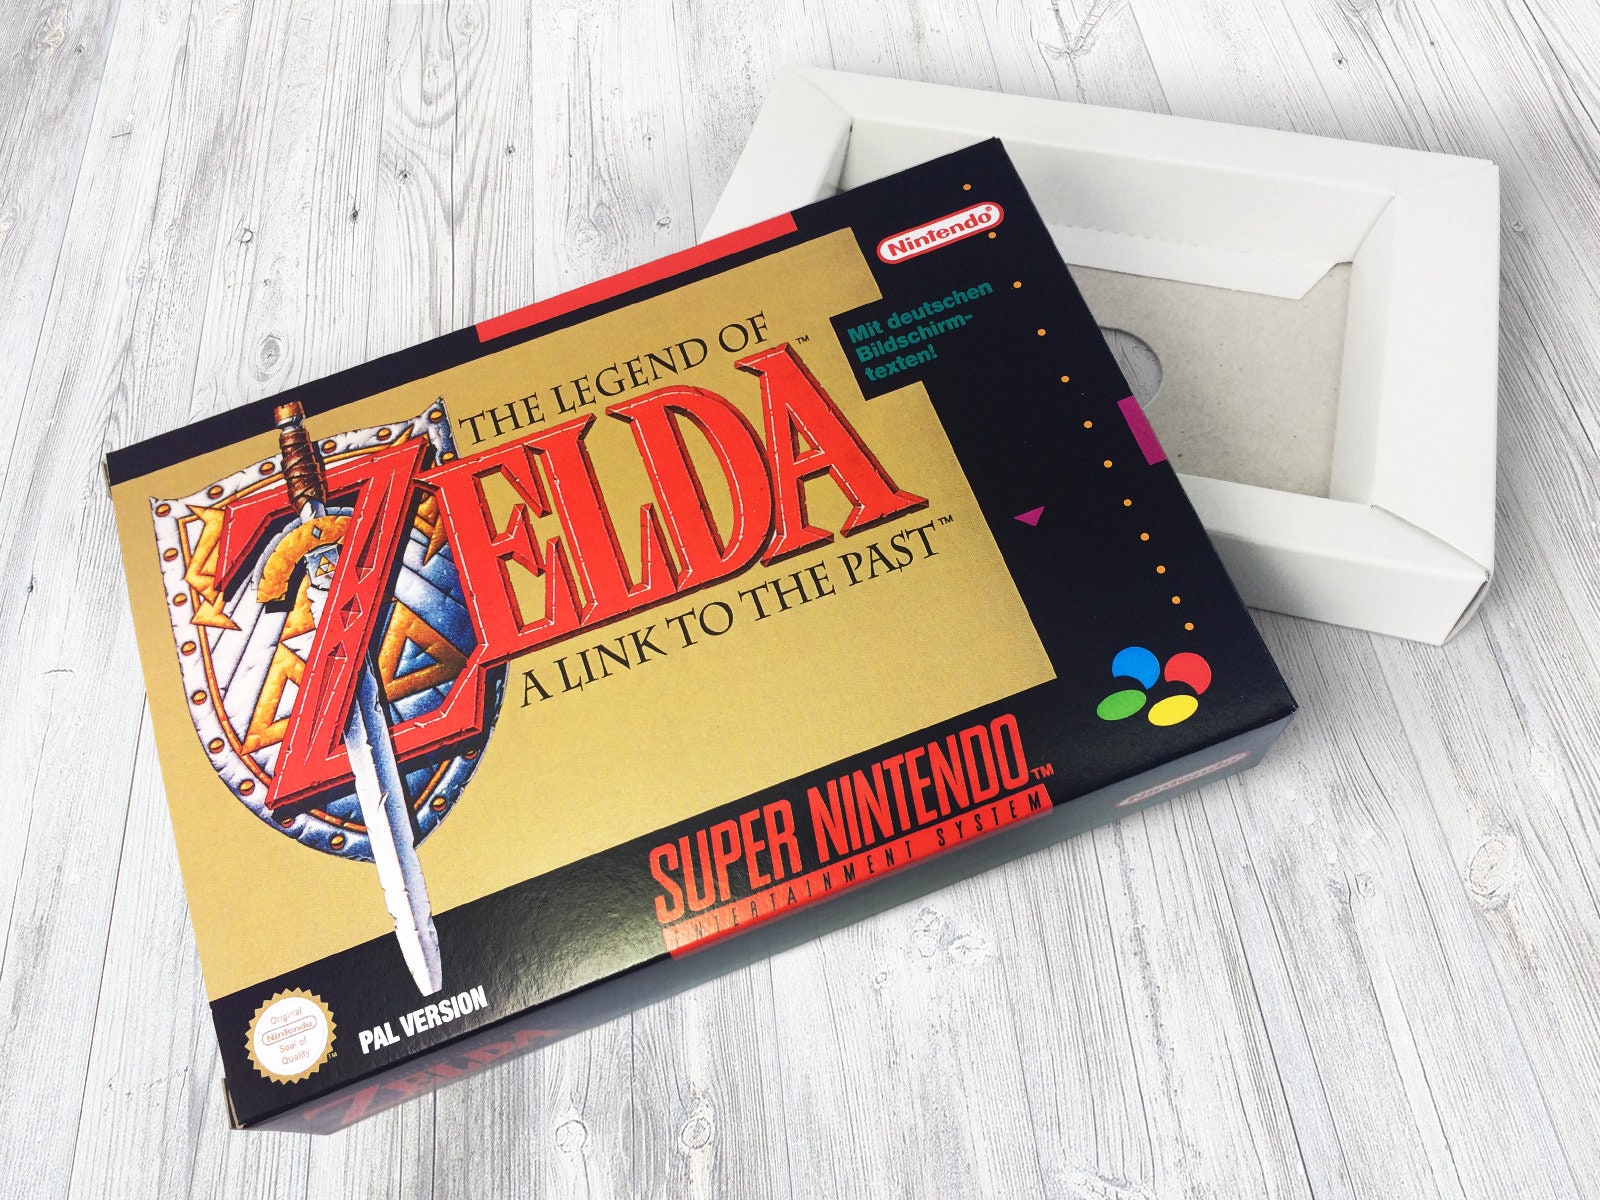 The Legend of Zelda: A Link to the Past, Super Nintendo